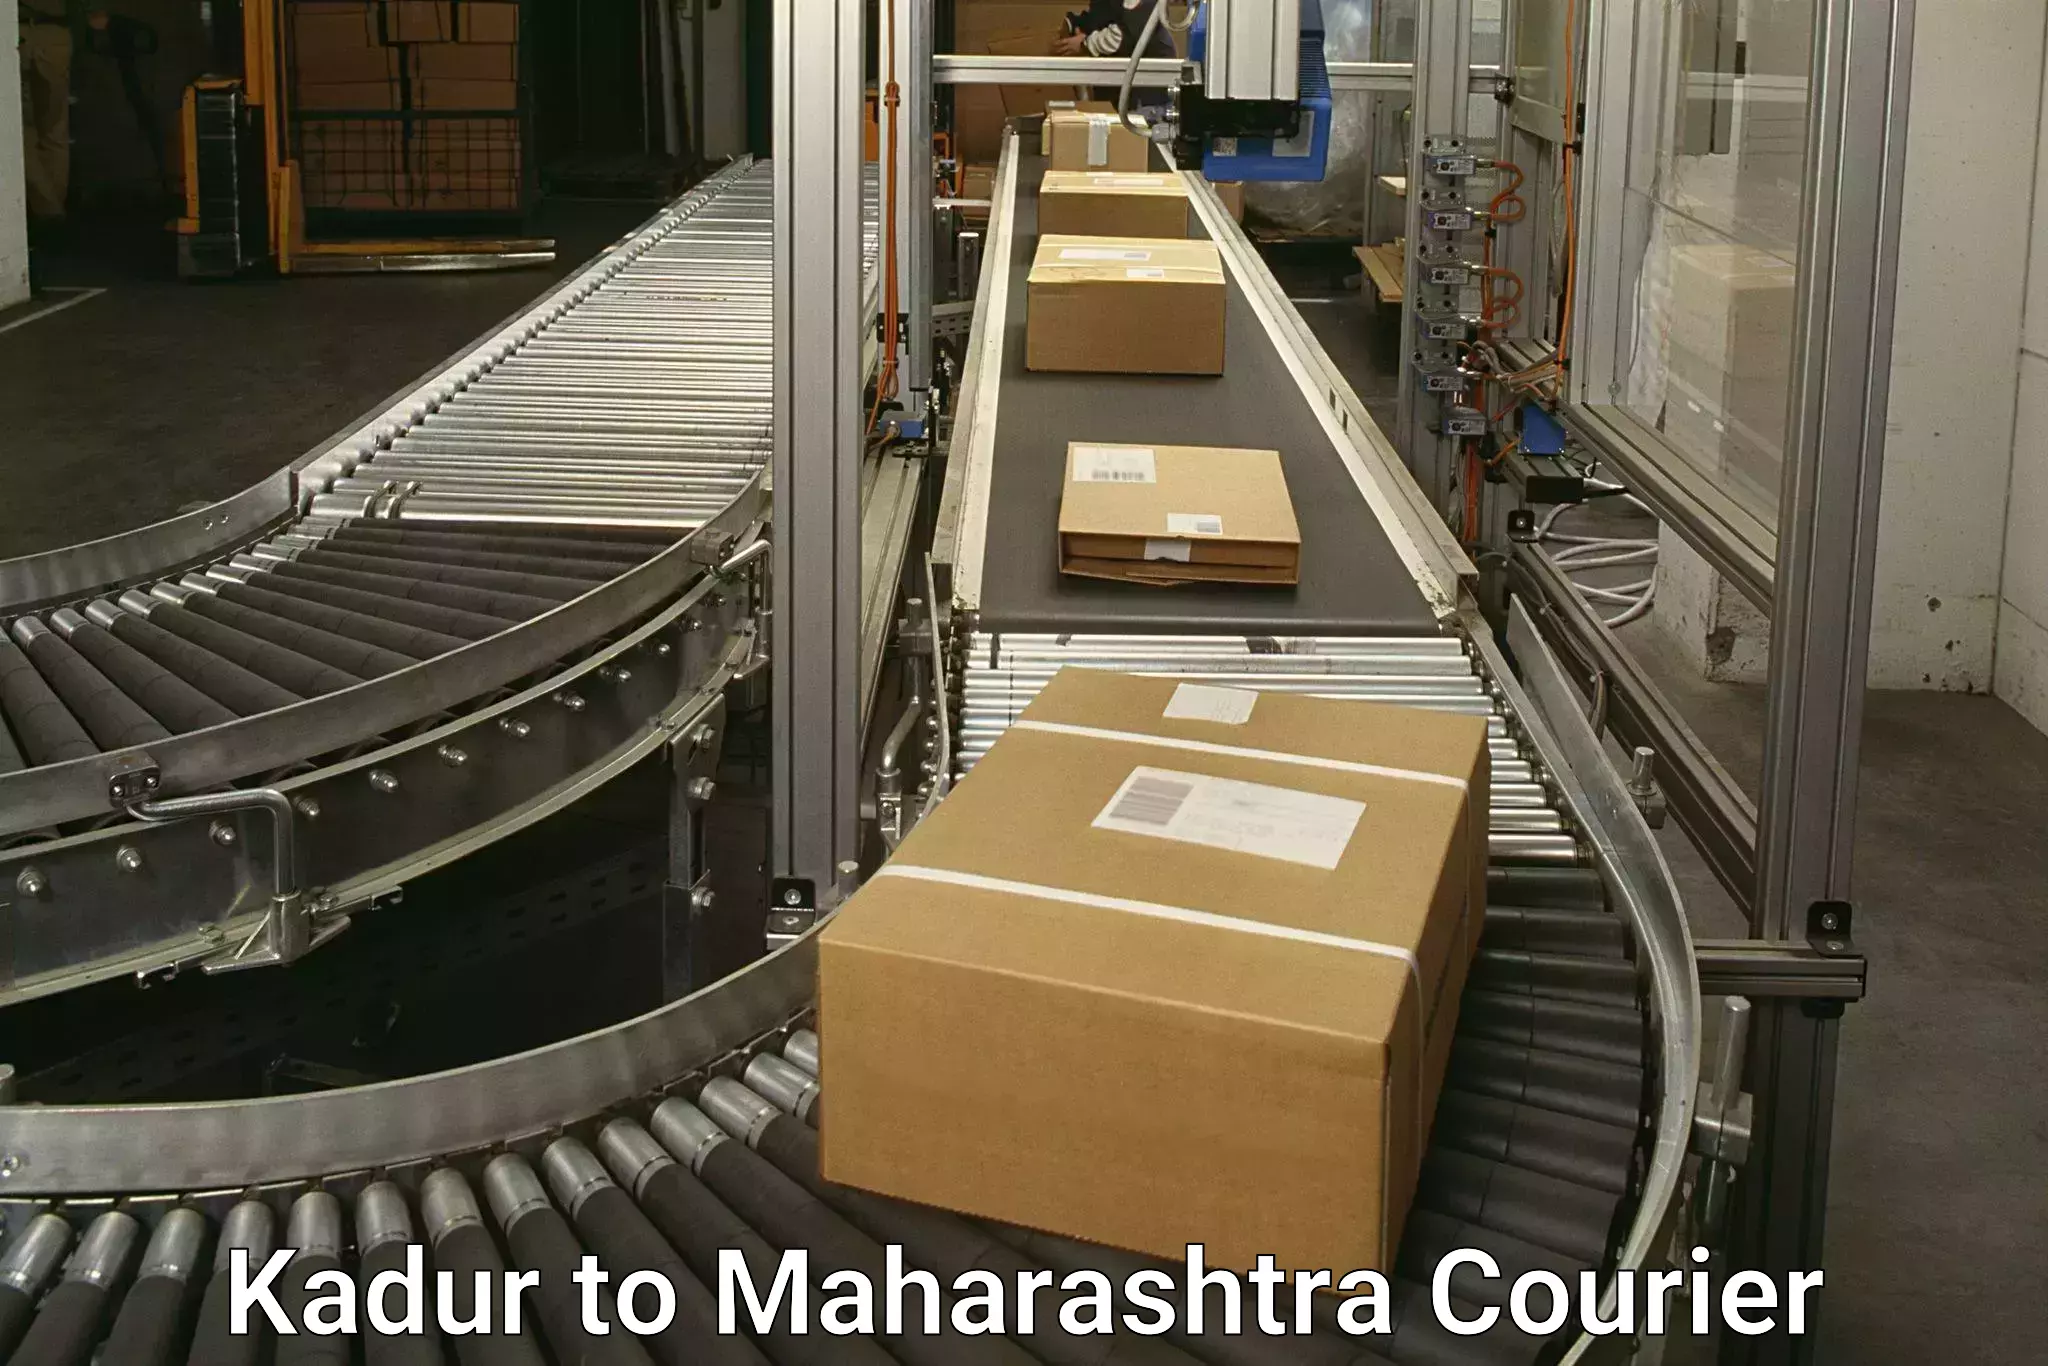 Global shipping networks Kadur to Navi Mumbai